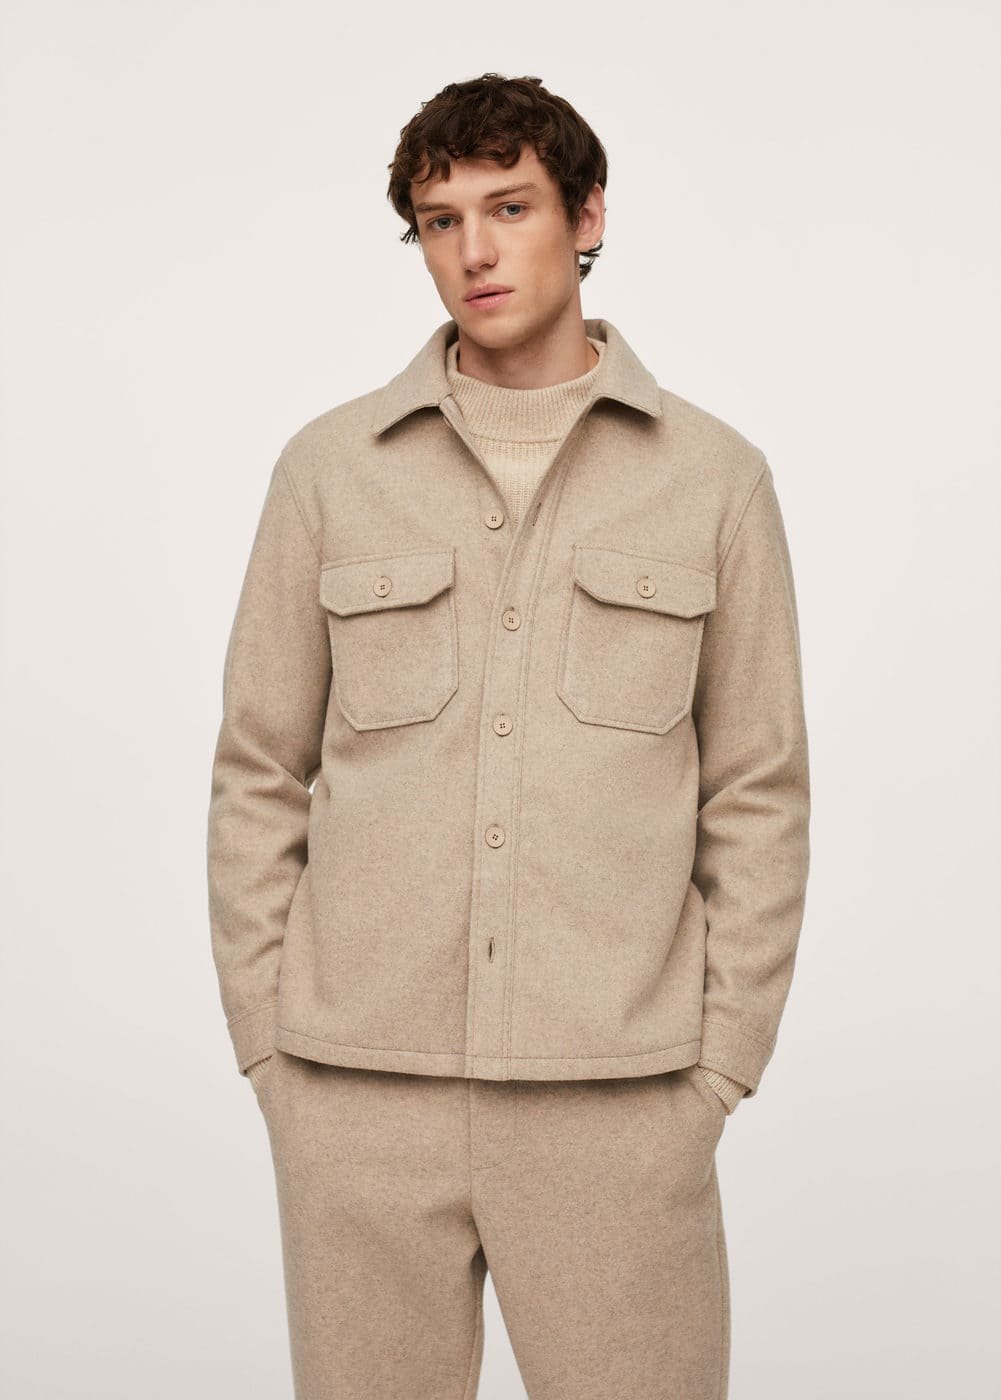 Pocket textured jacket - Men | Mango Man USA